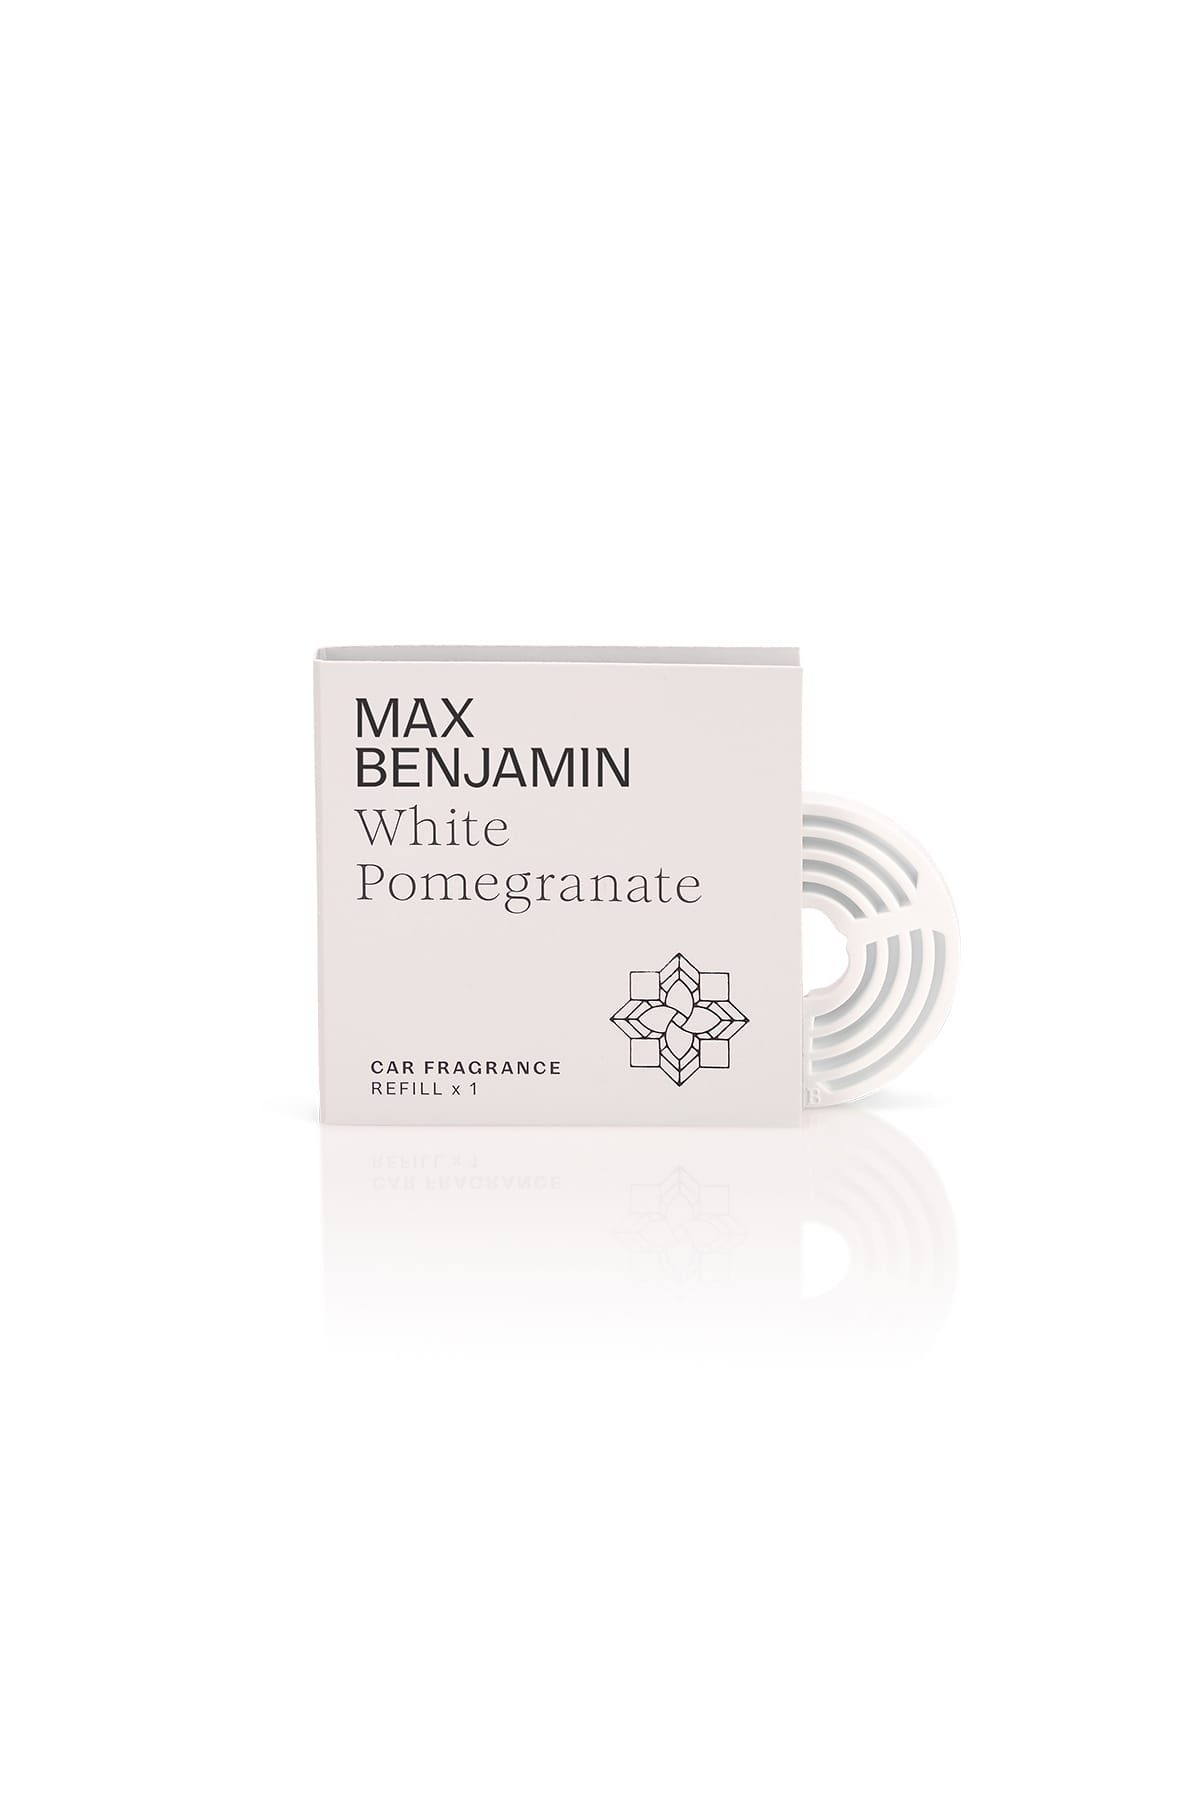 Autoduft Car Fragrance Refill White Pomegranate Duftkarten Max Benjamin 